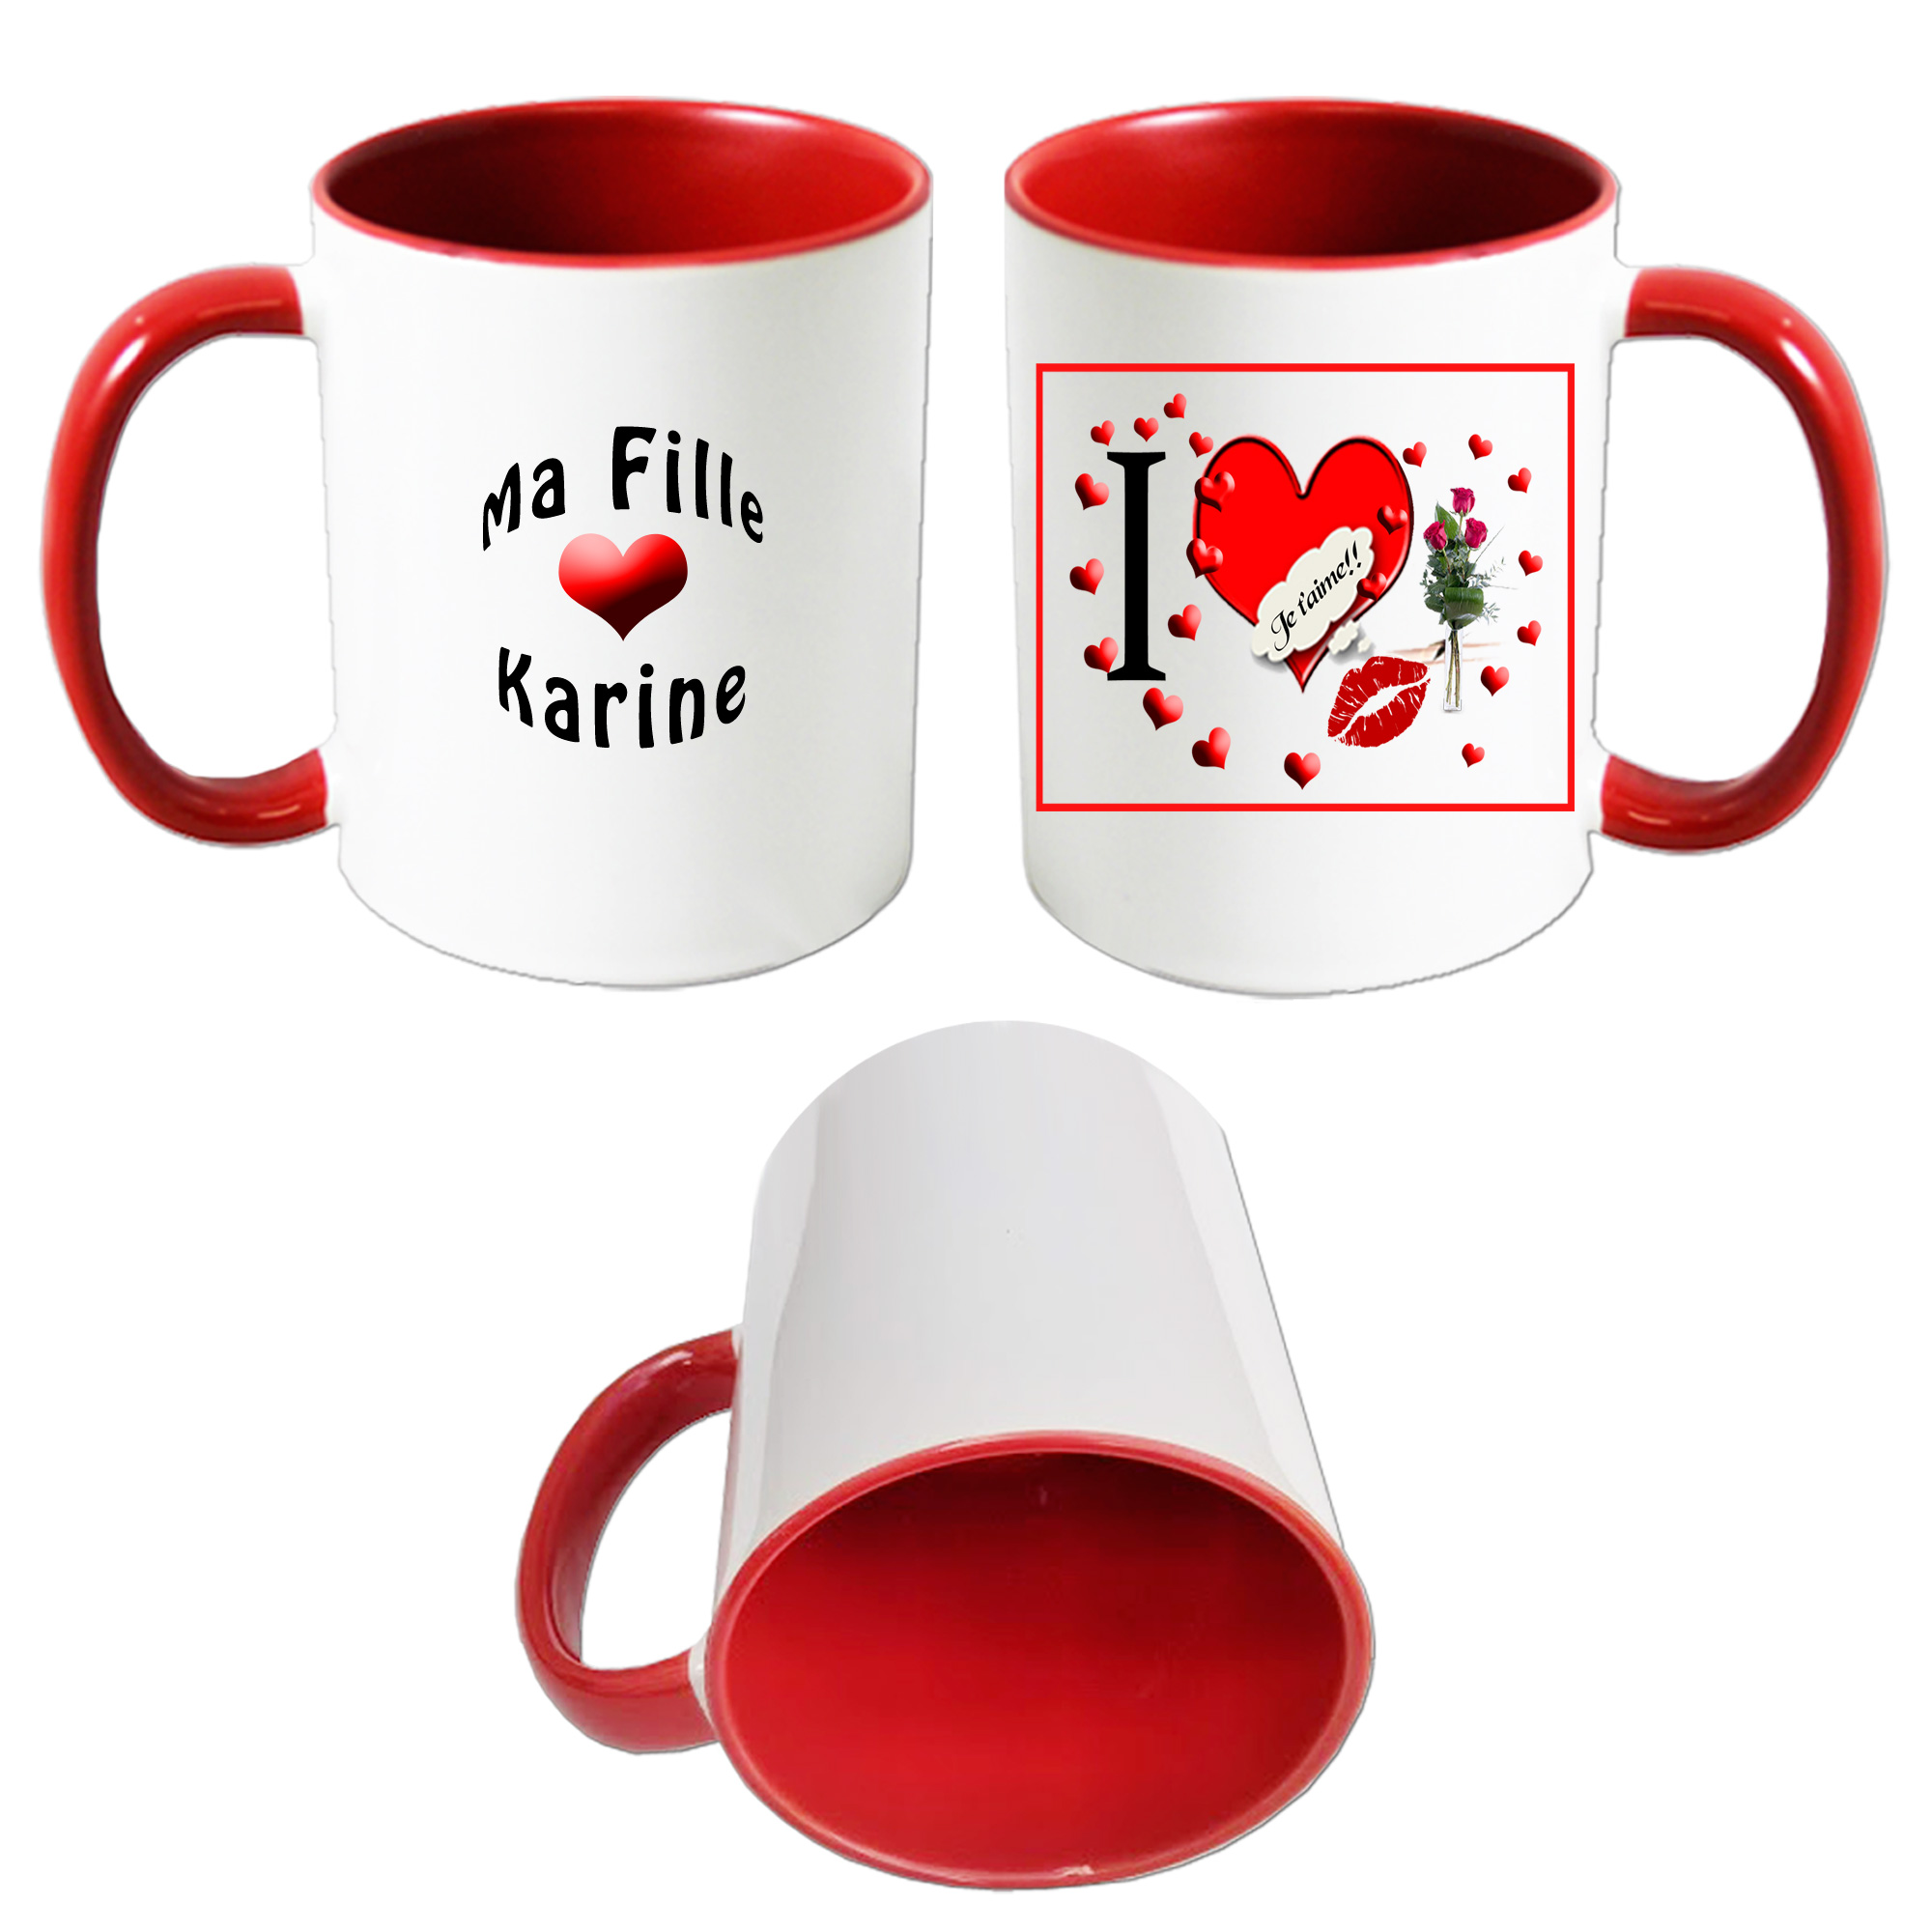 mafille-famille-mug-rouge-personnalisable-coeur-love-amour-phrase-rectangle-prenom-karine